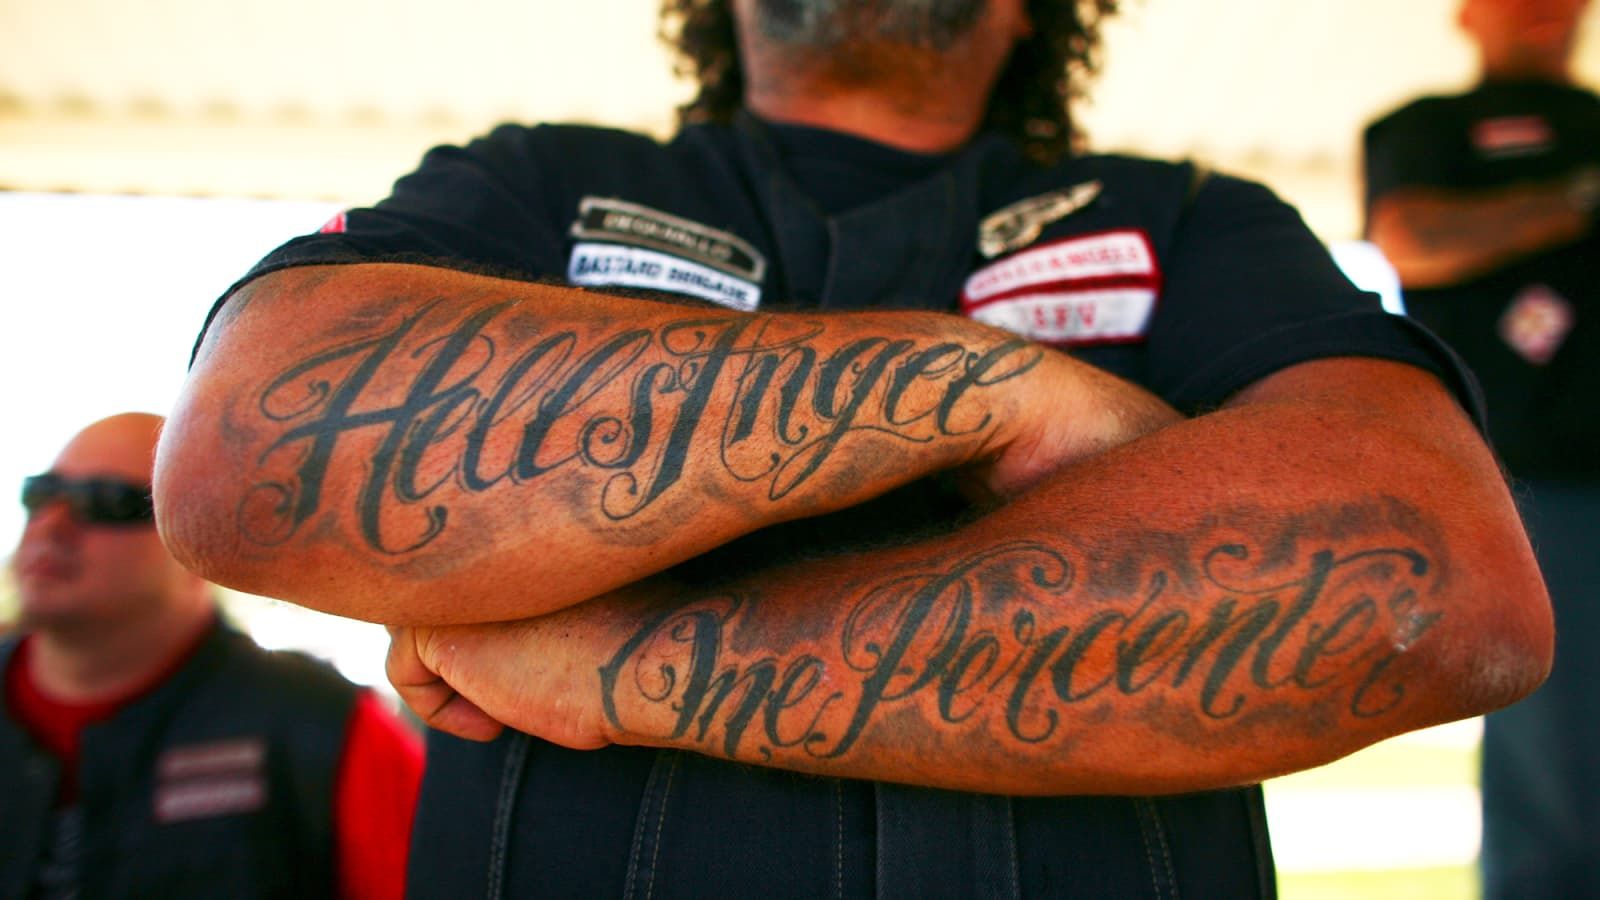 Hells Angels Motorcycle Club tattoo 